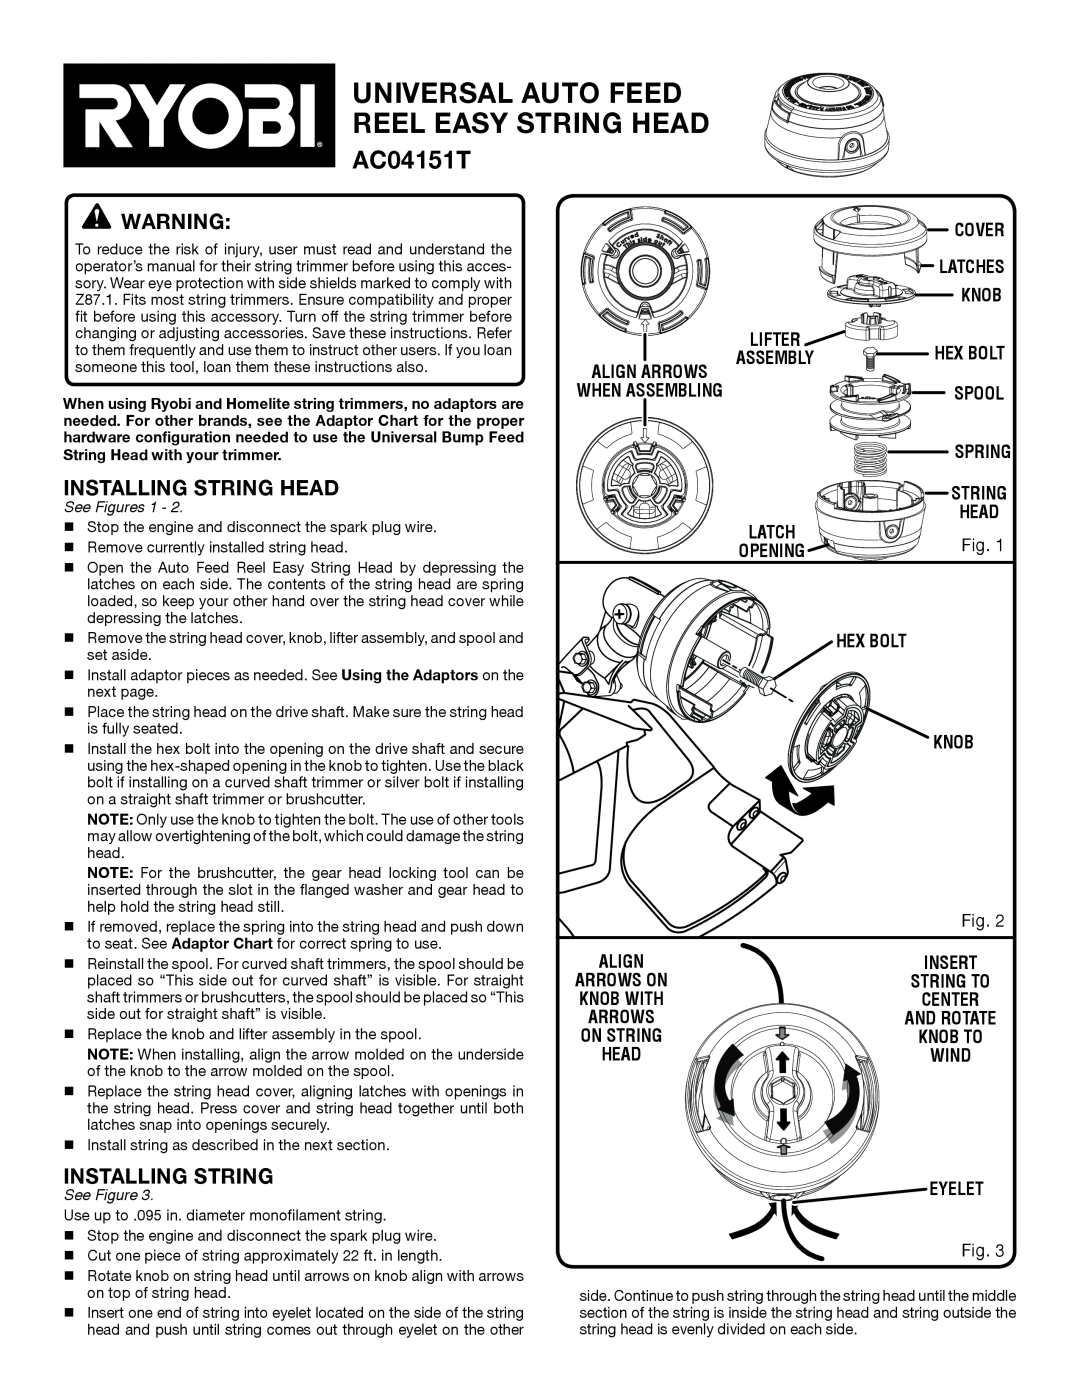 Ryobi AC04151T manual installing string head, installing strinG, universal auto feed Reel Easy string head 